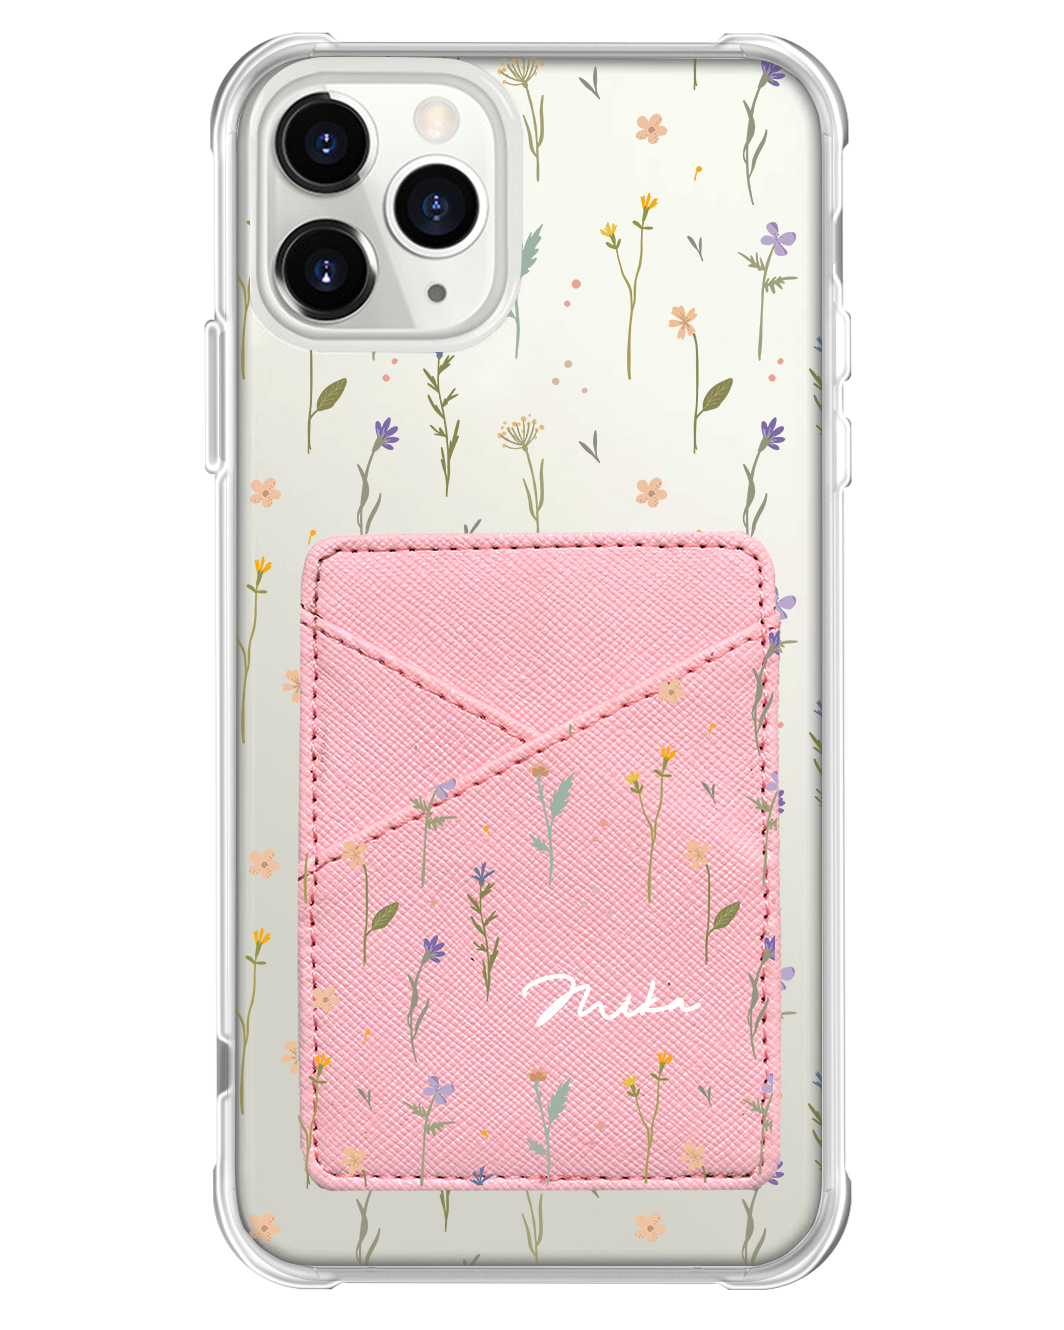 iPhone Phone Wallet Case - Botanical Garden 2.0